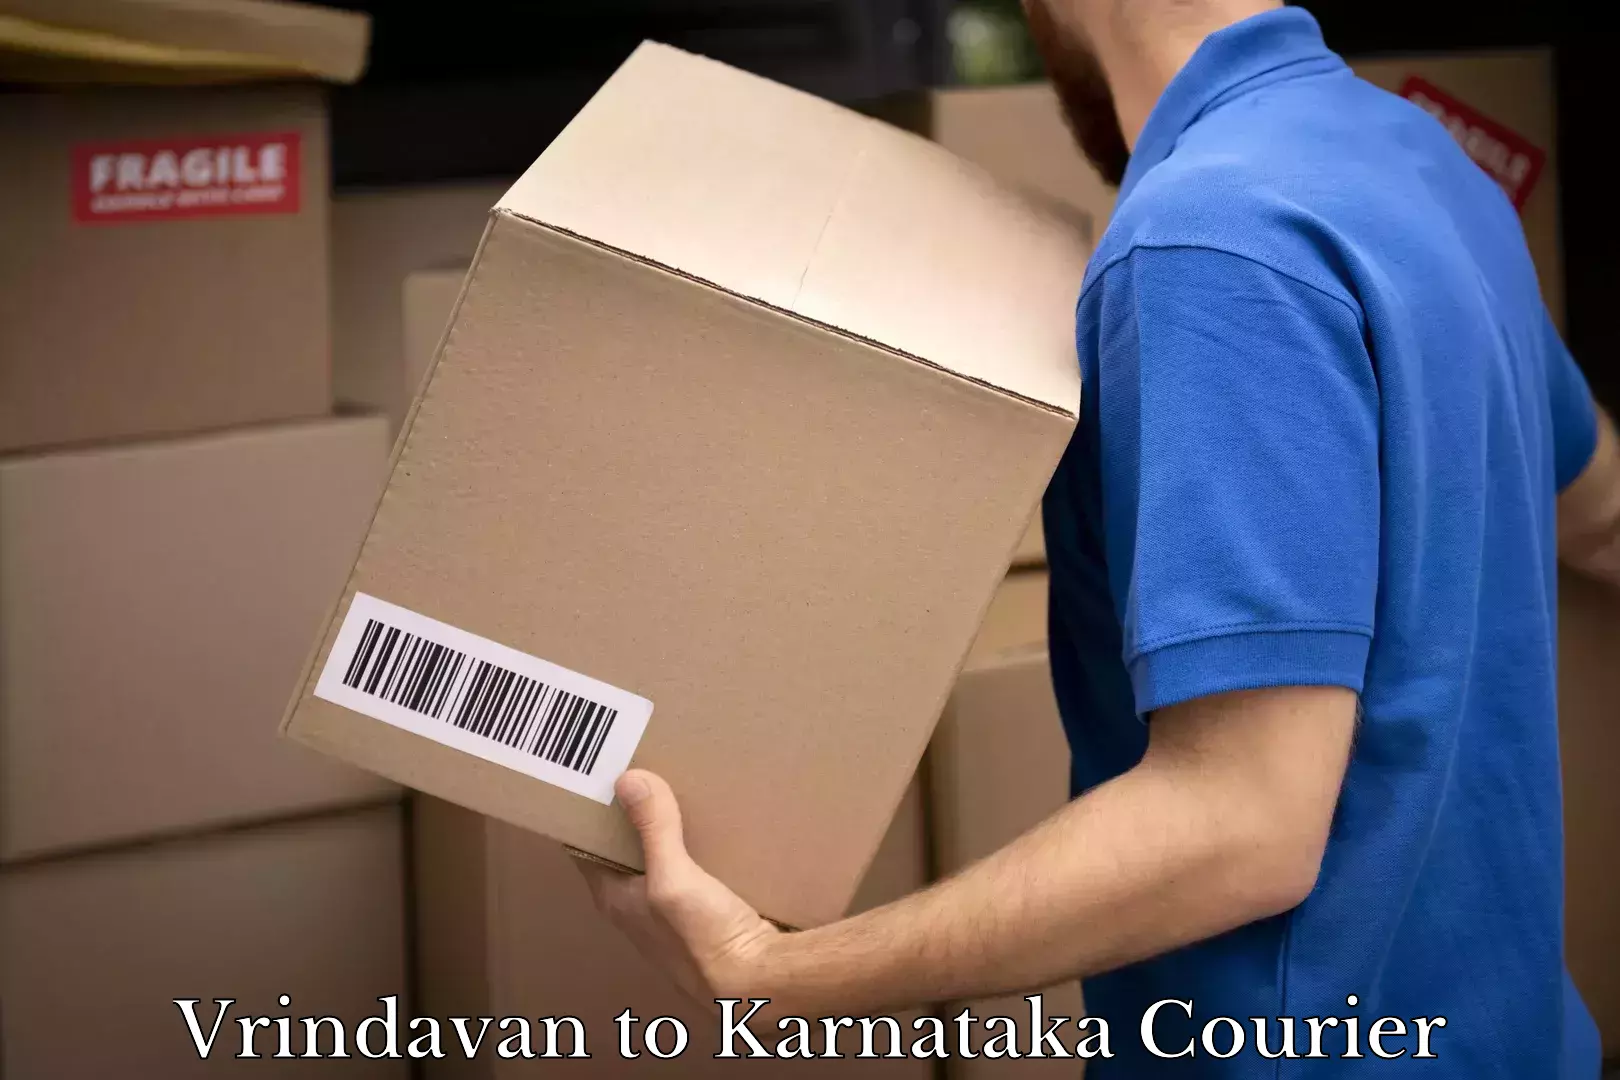 Courier service innovation Vrindavan to Karnataka